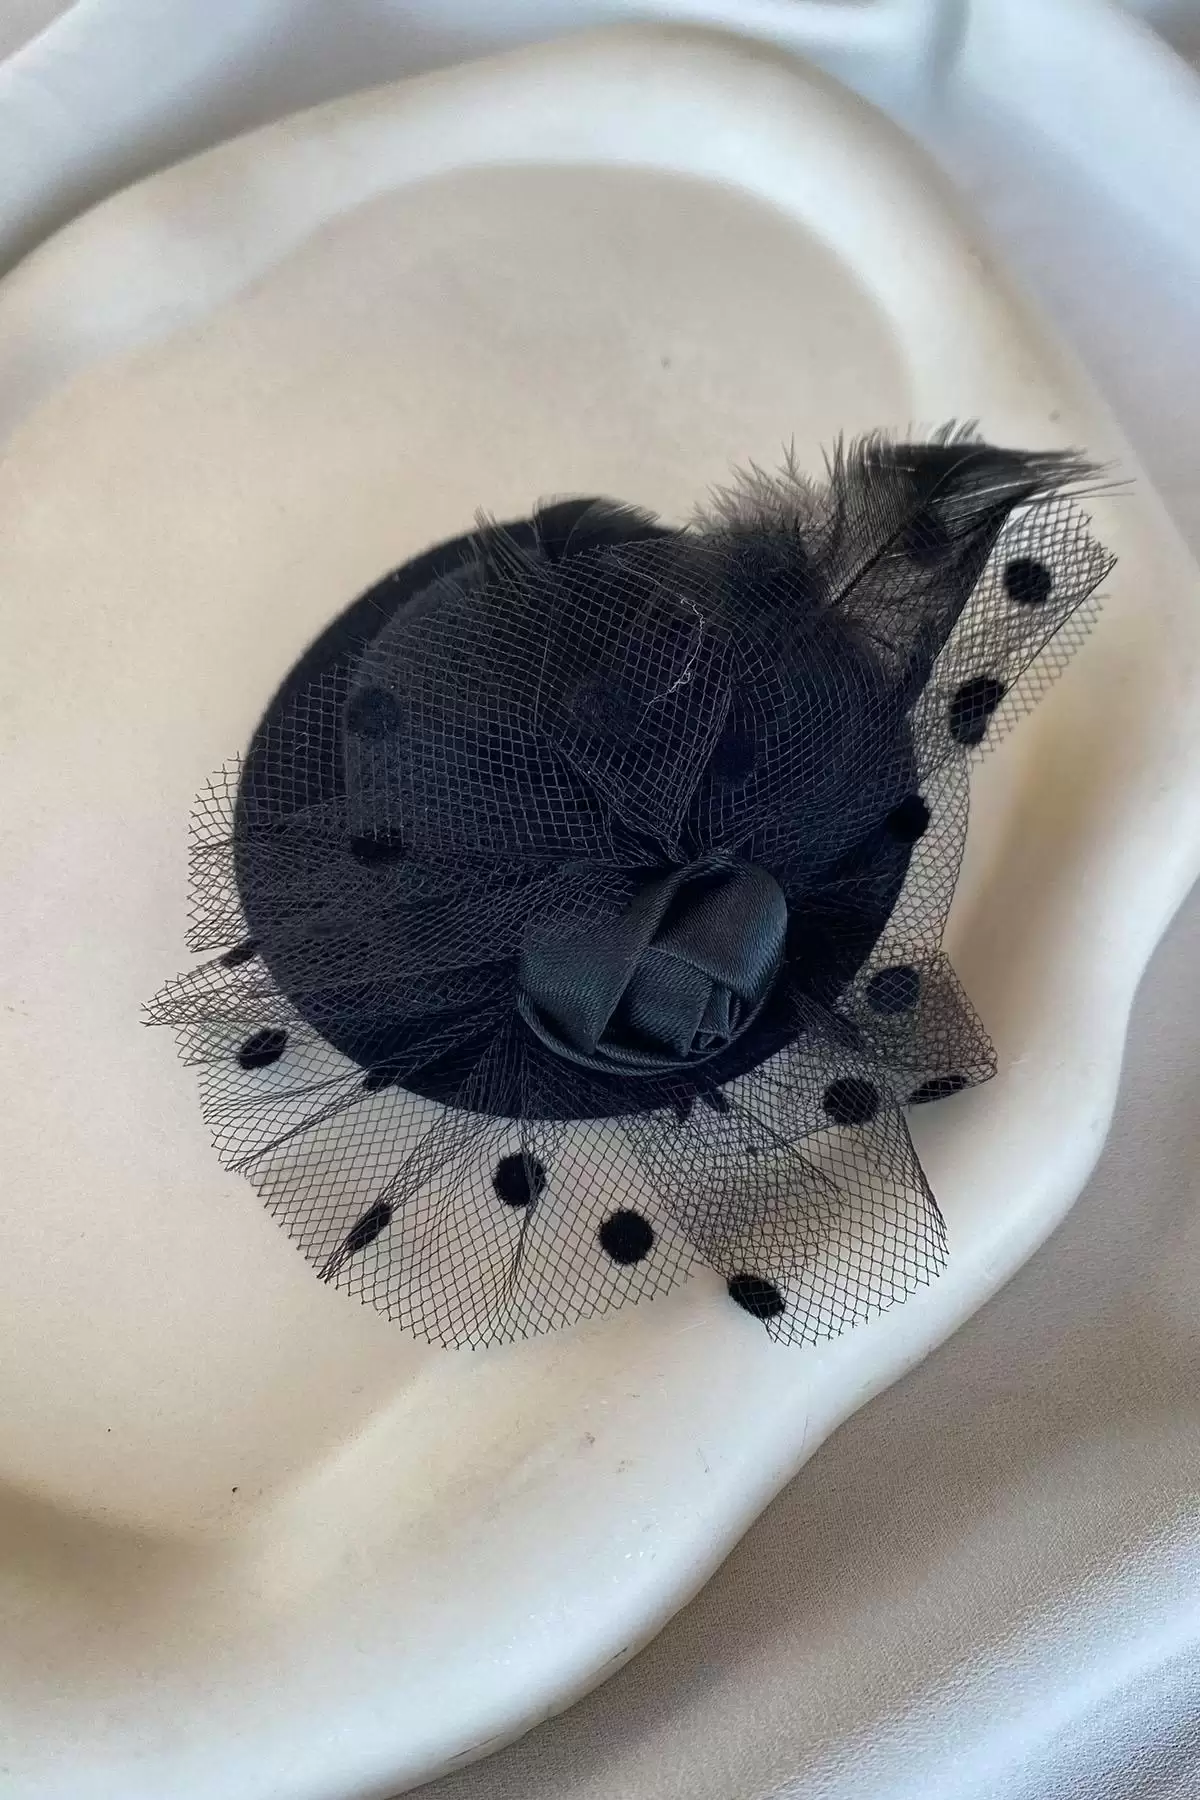 Siyah Renk Çiçek Detaylı Mini Nikah Şapkası/Vualet Şapka Pens Detaylı Toka